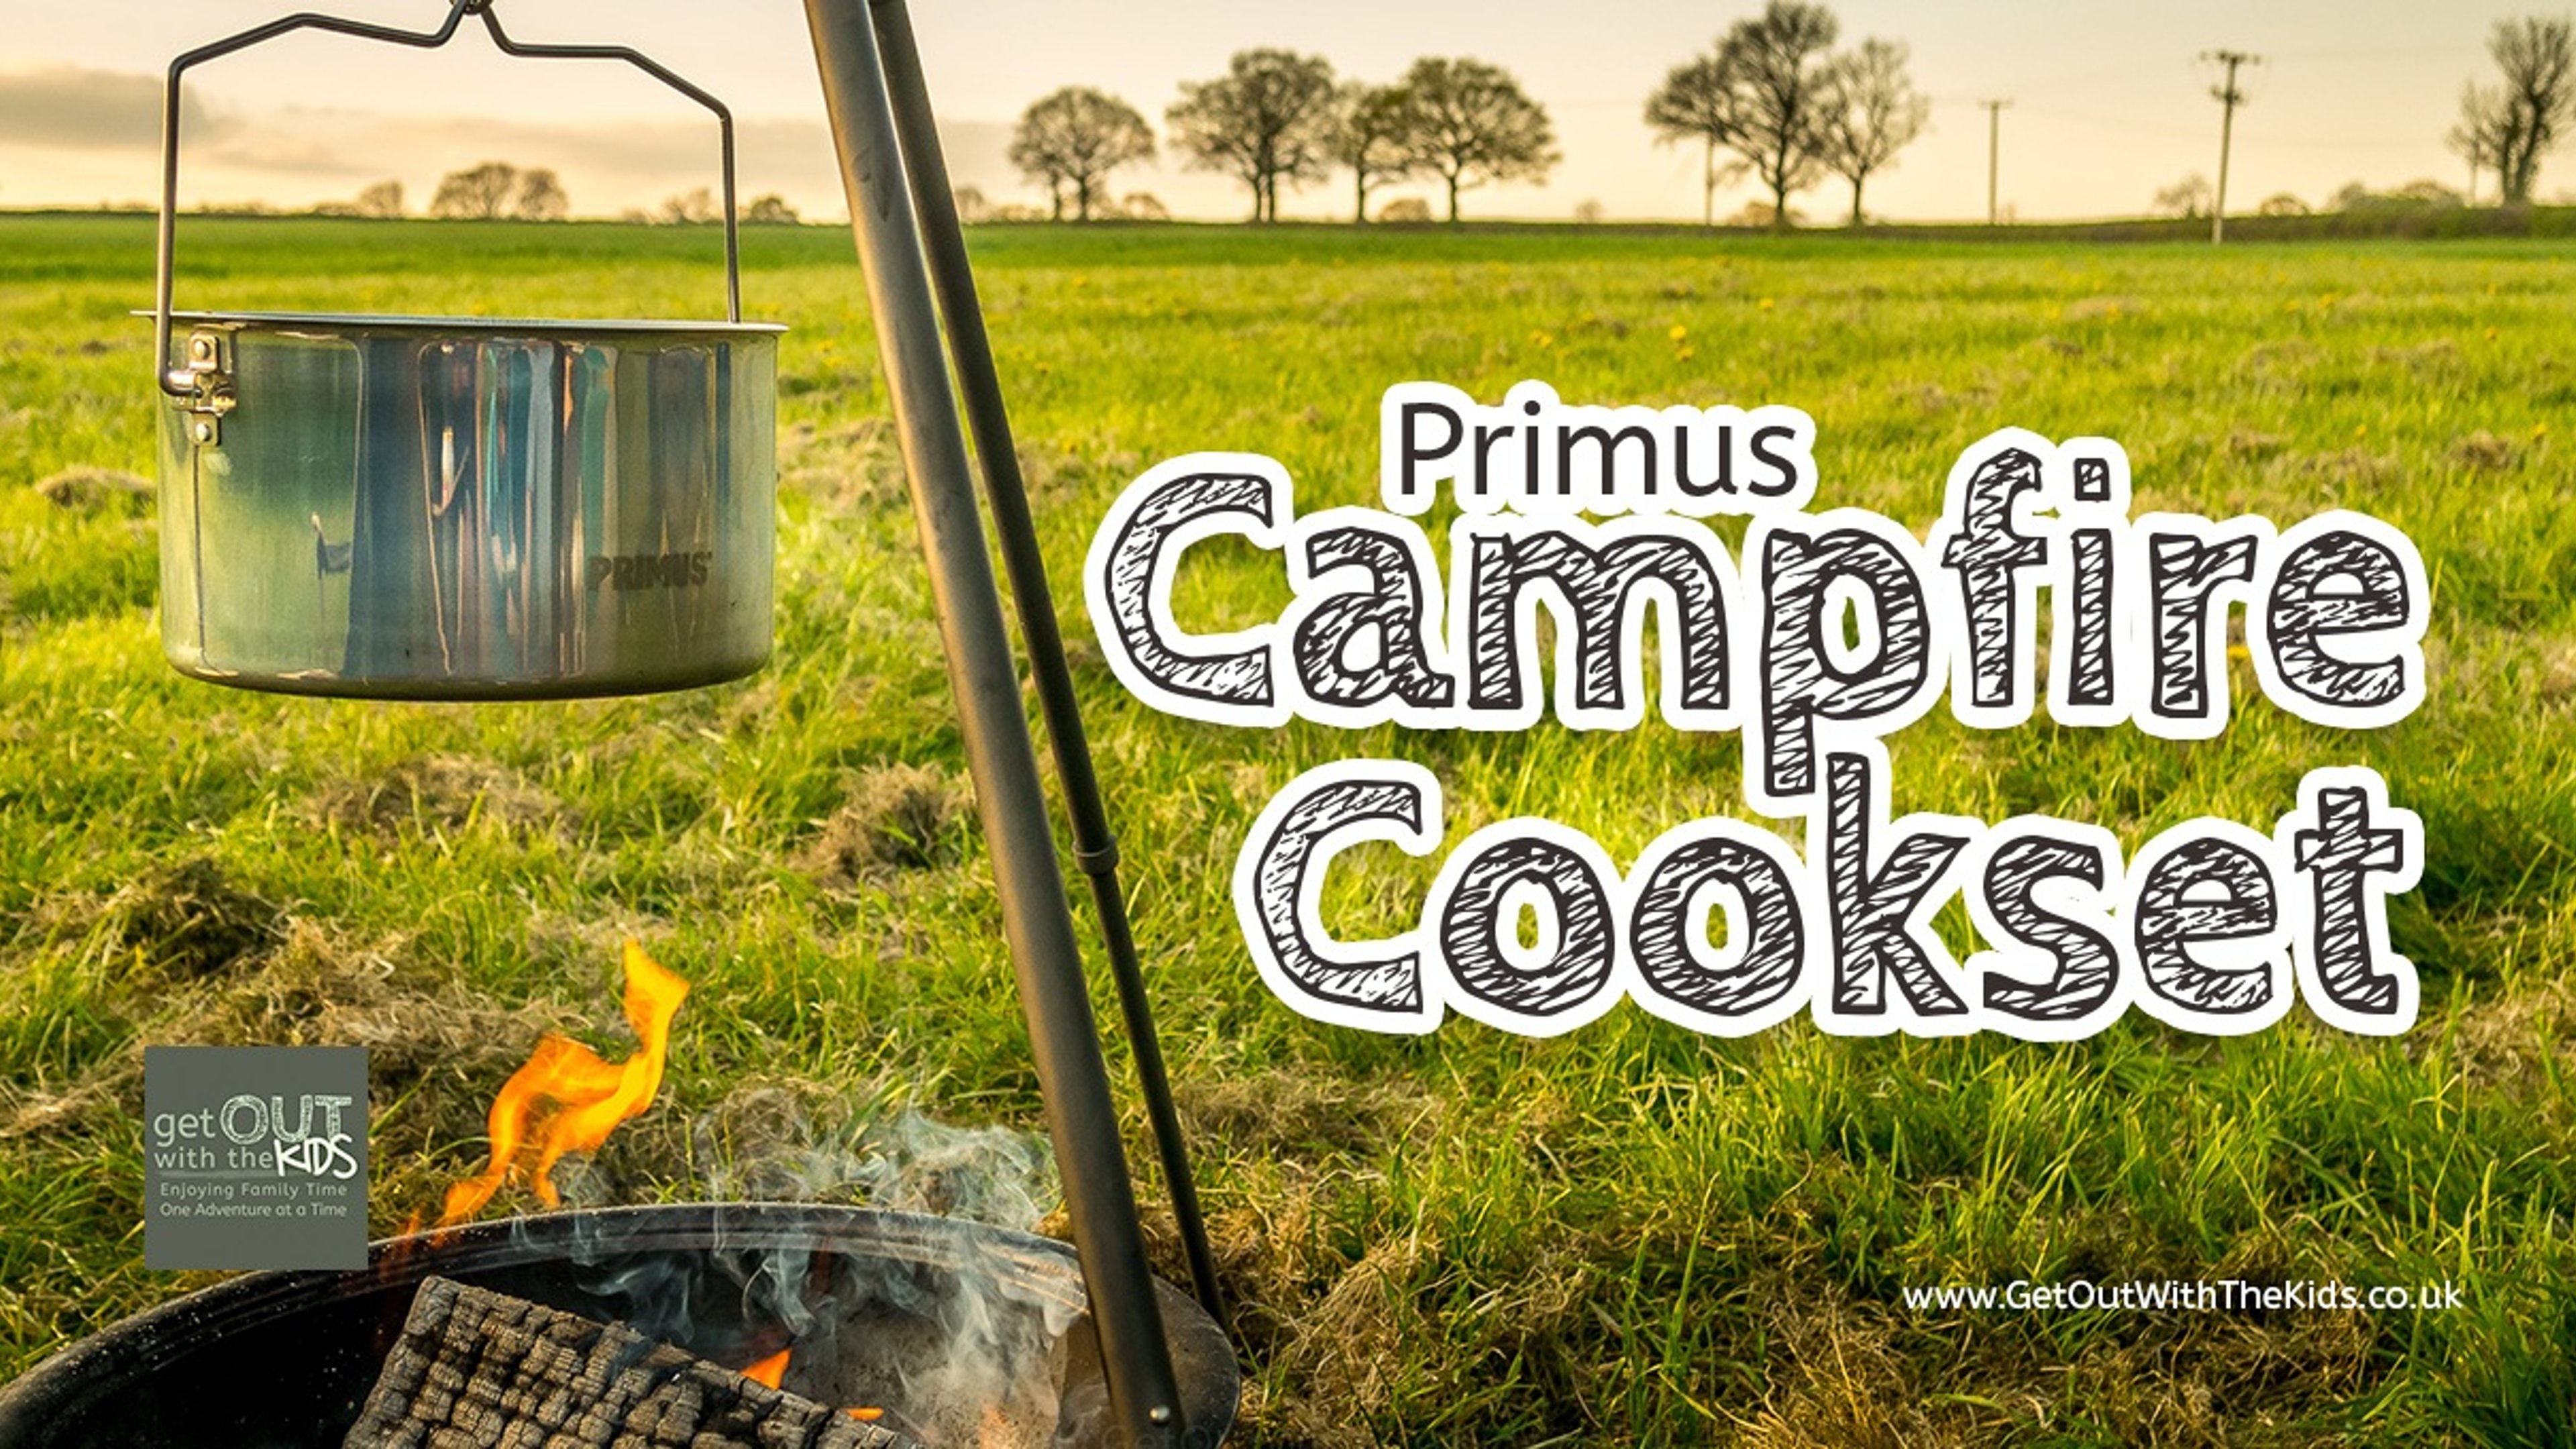 Primus Campfire Cookset over campfire